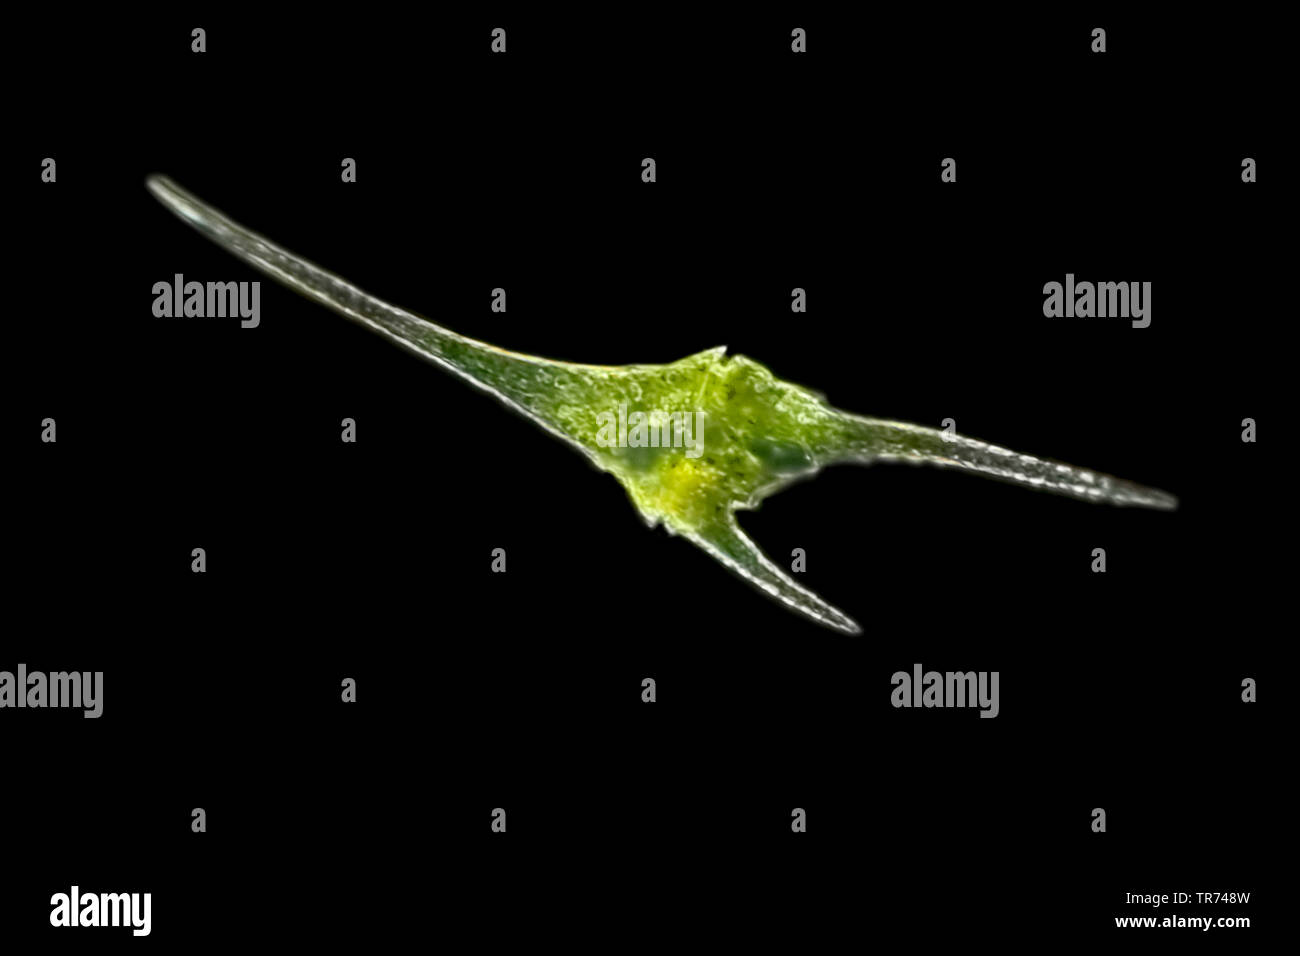 Dinoflagellé dans dark field, x 140, Allemagne Banque D'Images